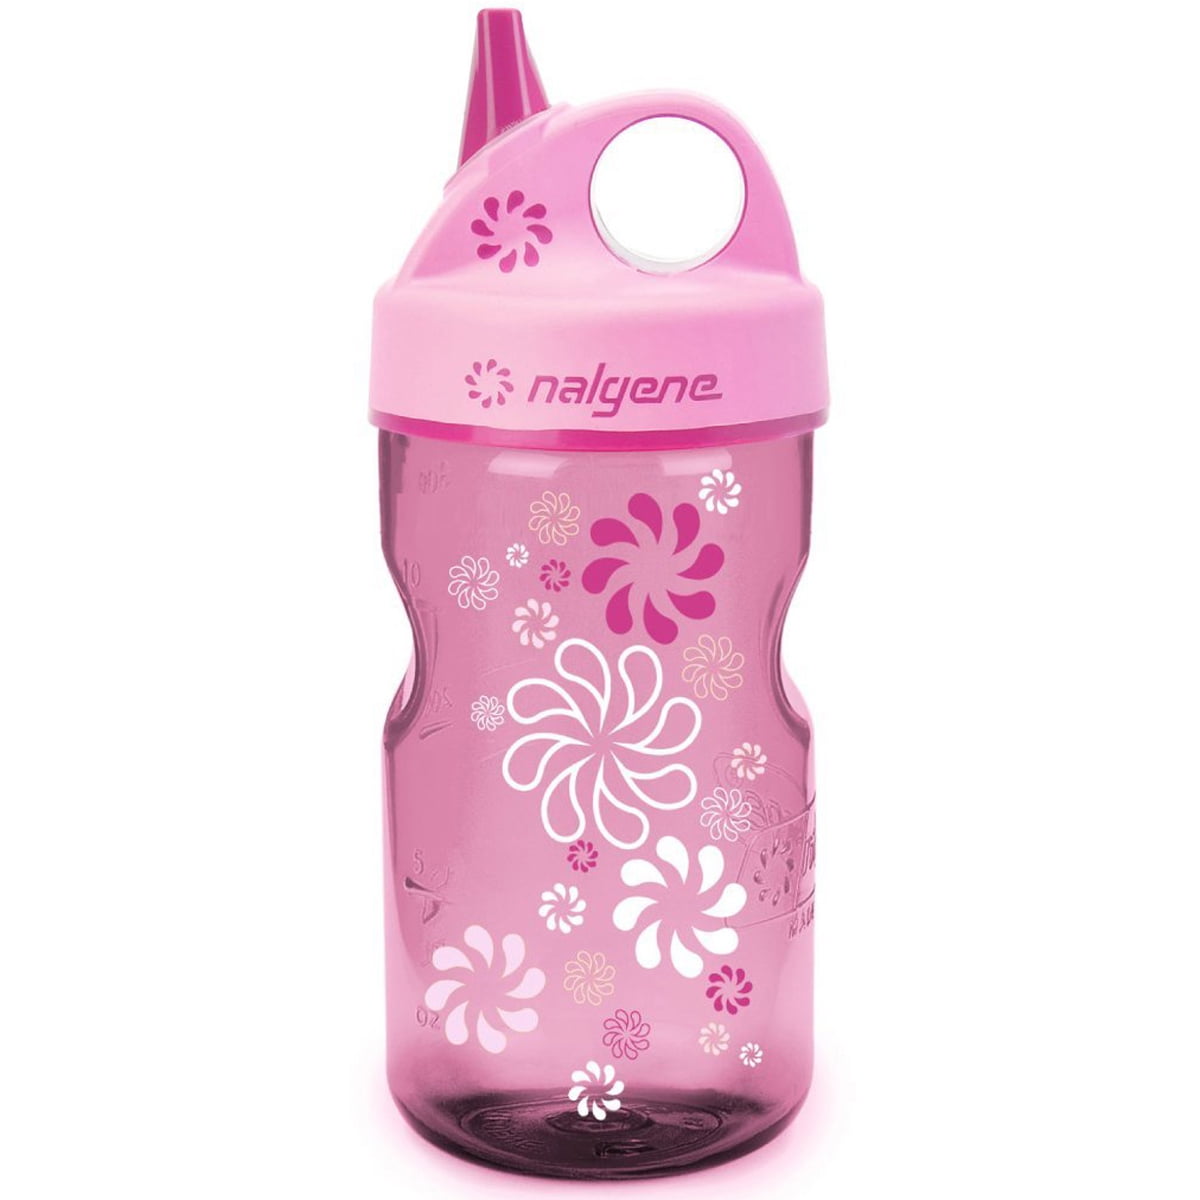 Nalgene Grip 'n Gulp Kids Water Bottle